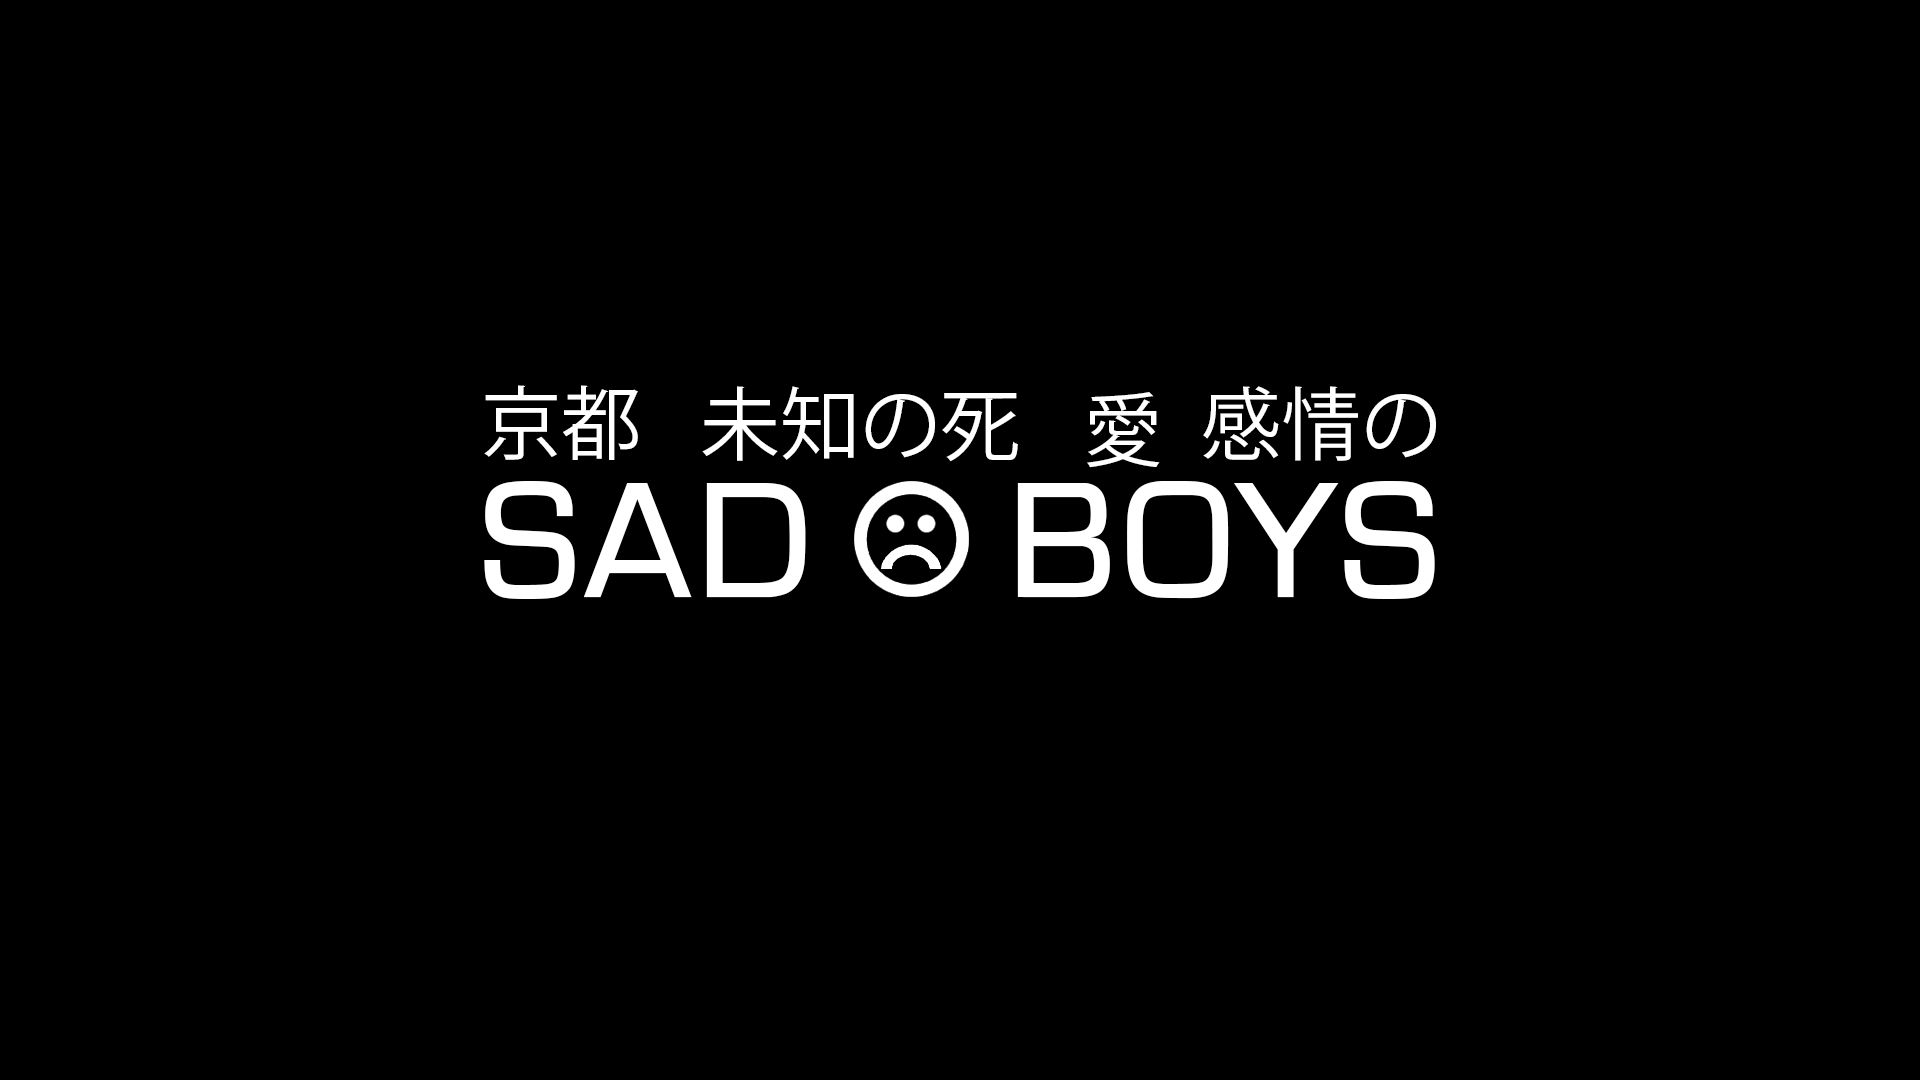 Sad boys 2001